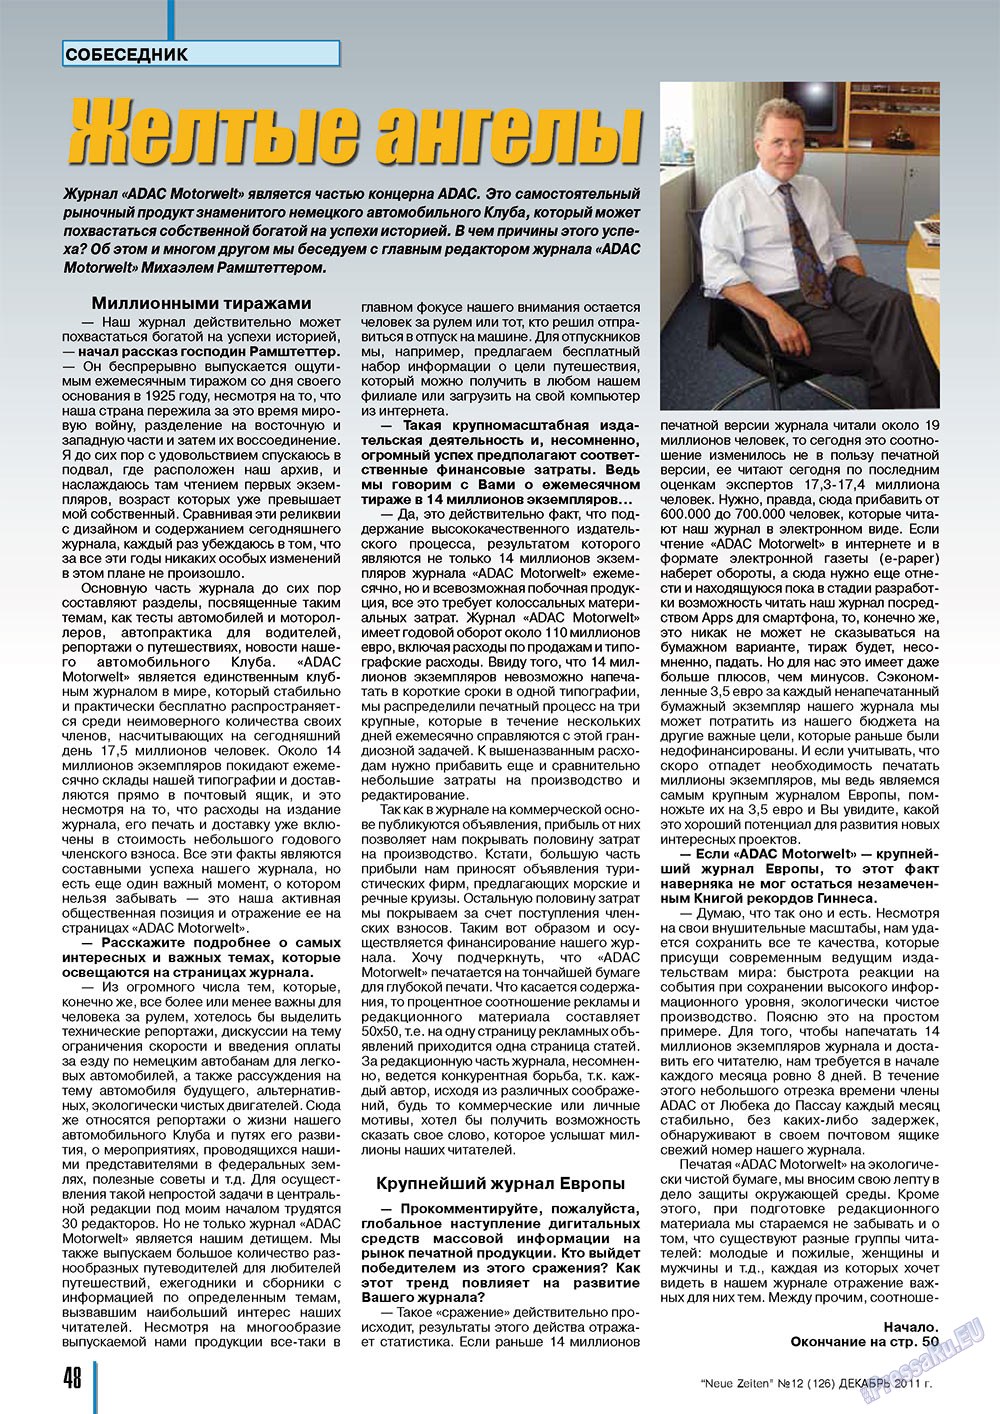 Neue Zeiten (журнал). 2011 год, номер 12, стр. 48